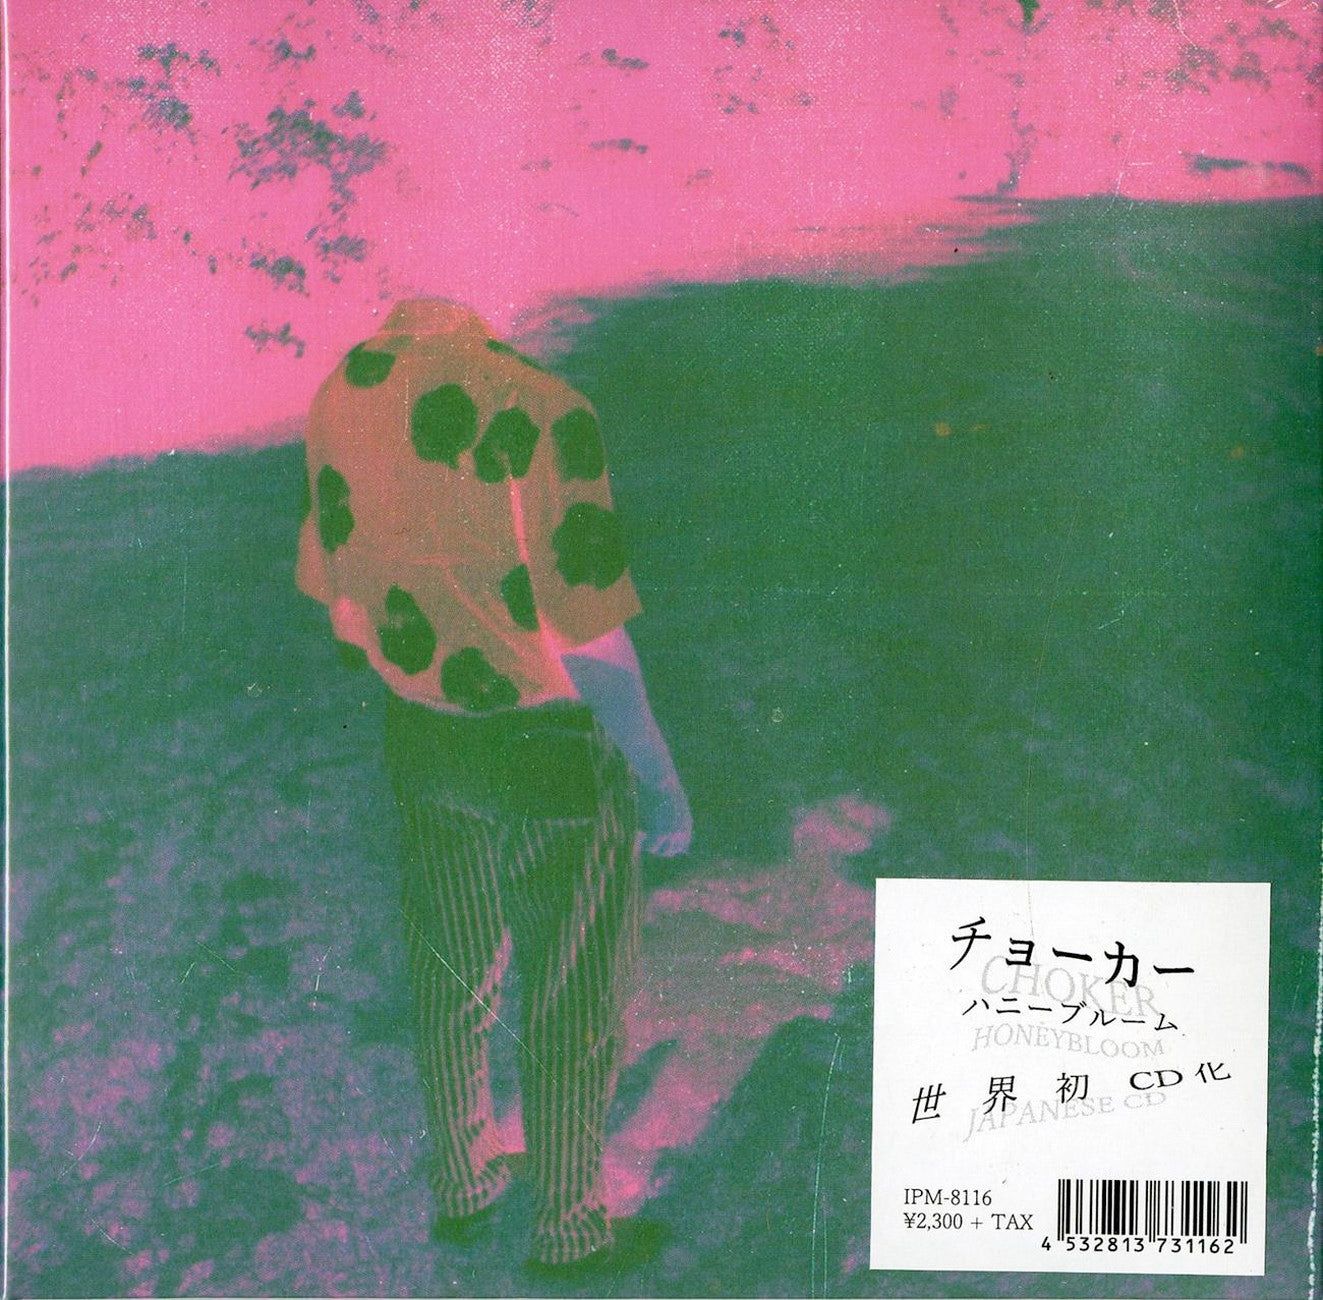 Choker - Honeybloom - Japan CD